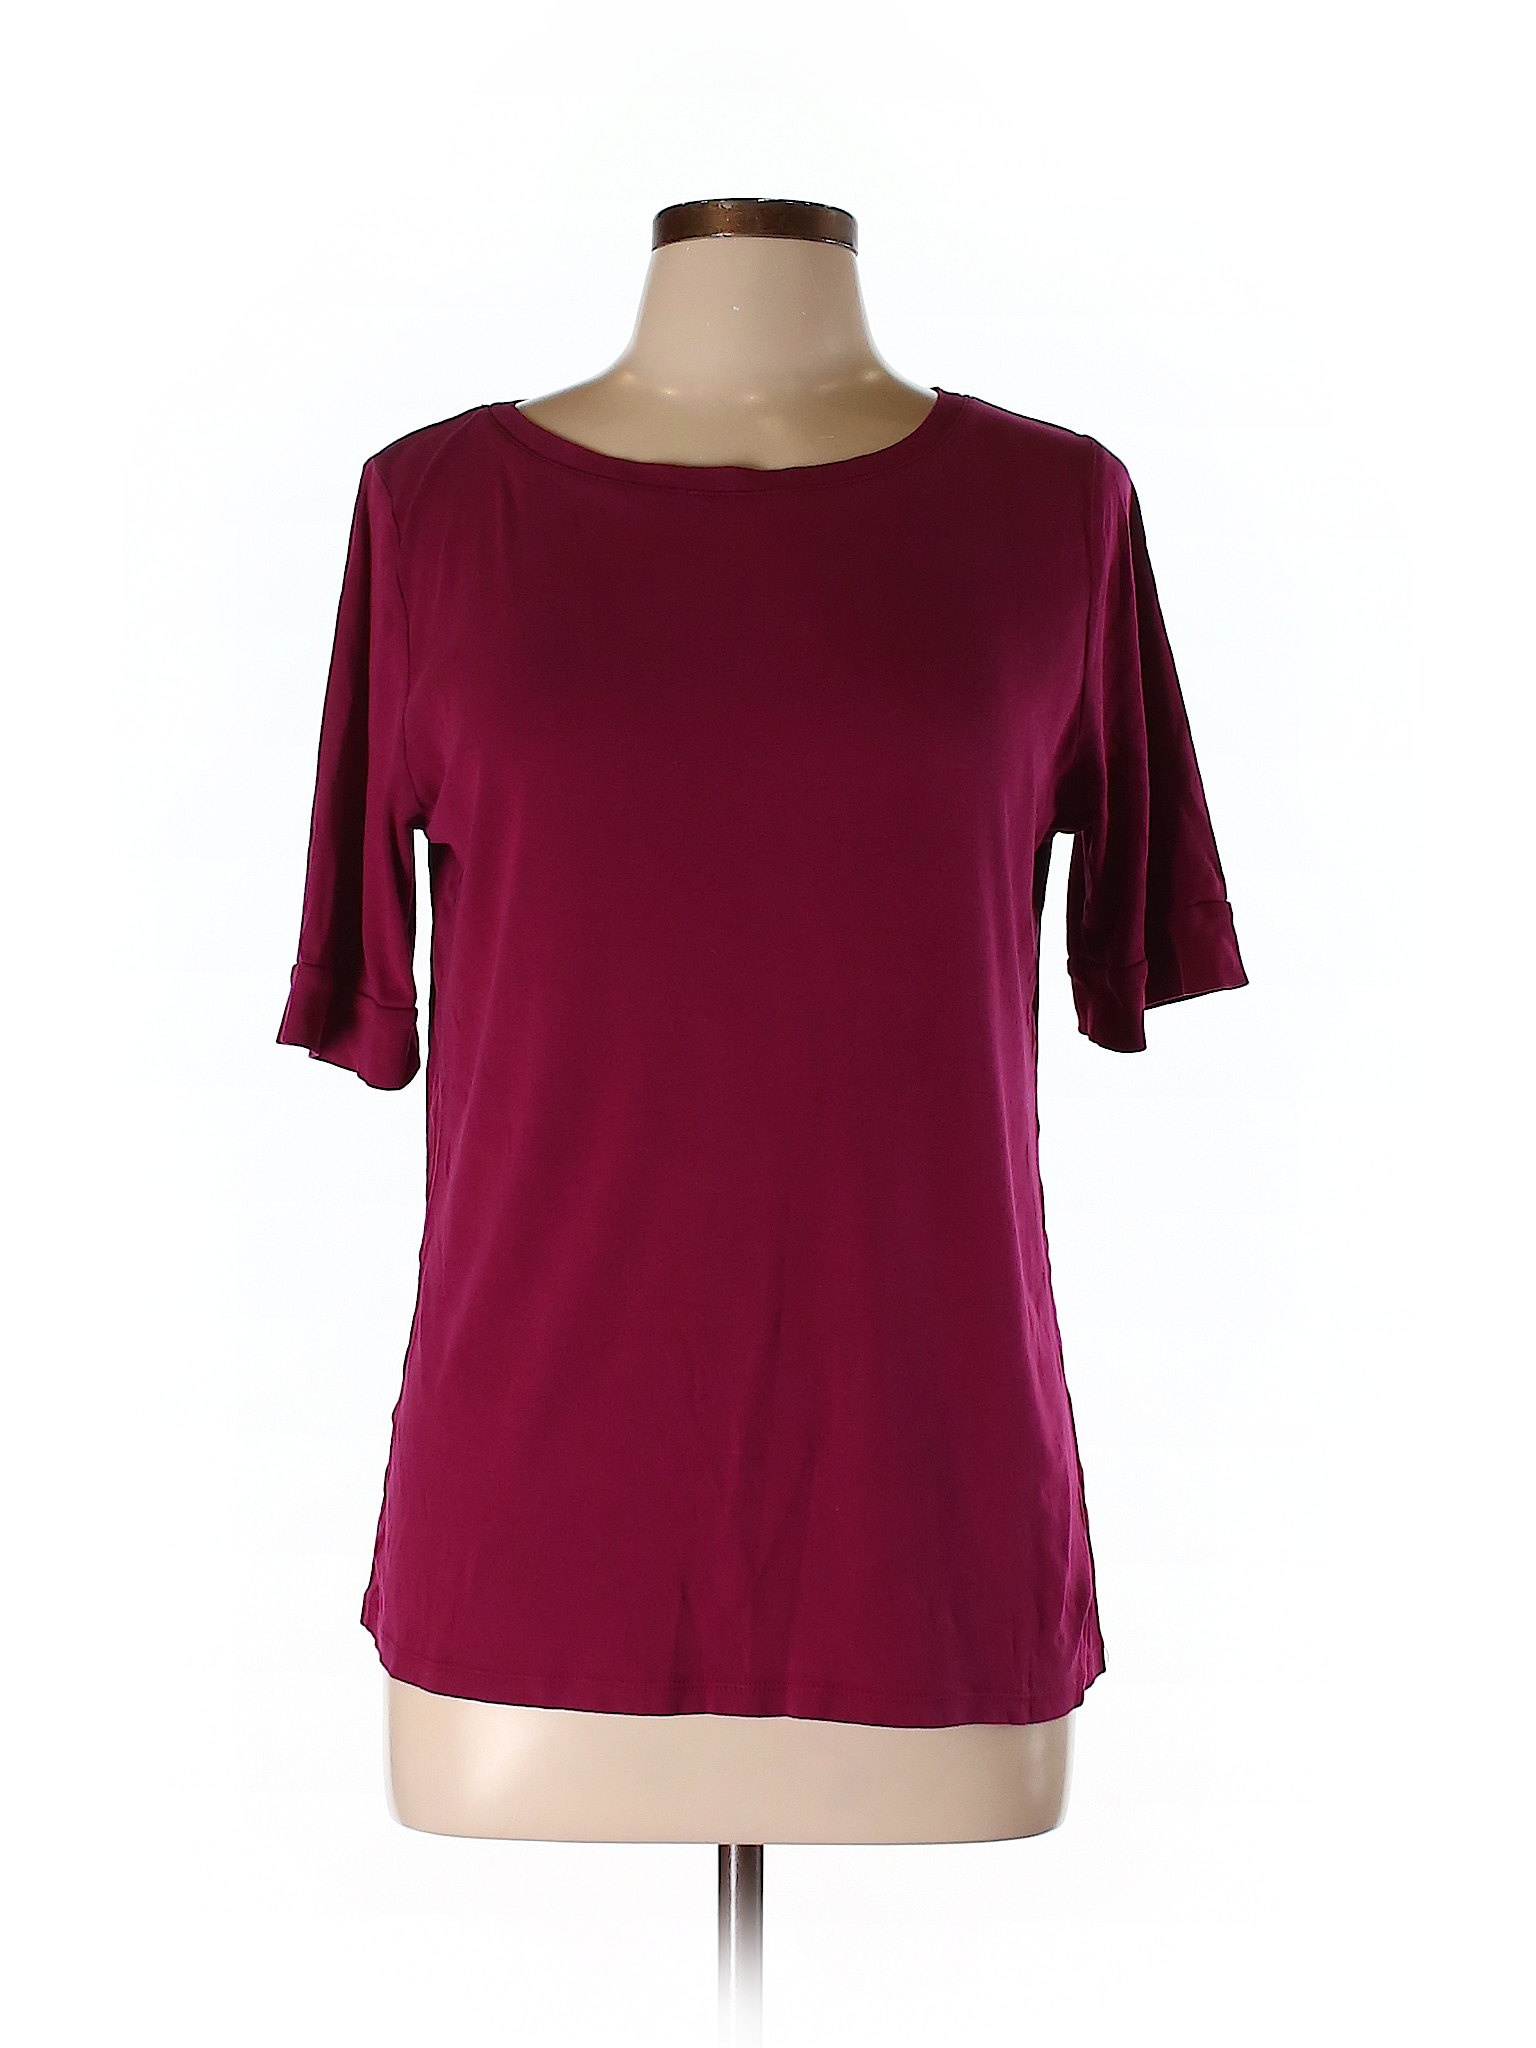 Merona 100% Cotton Solid Dark Purple 3/4 Sleeve T-Shirt Size XL - 50% ...